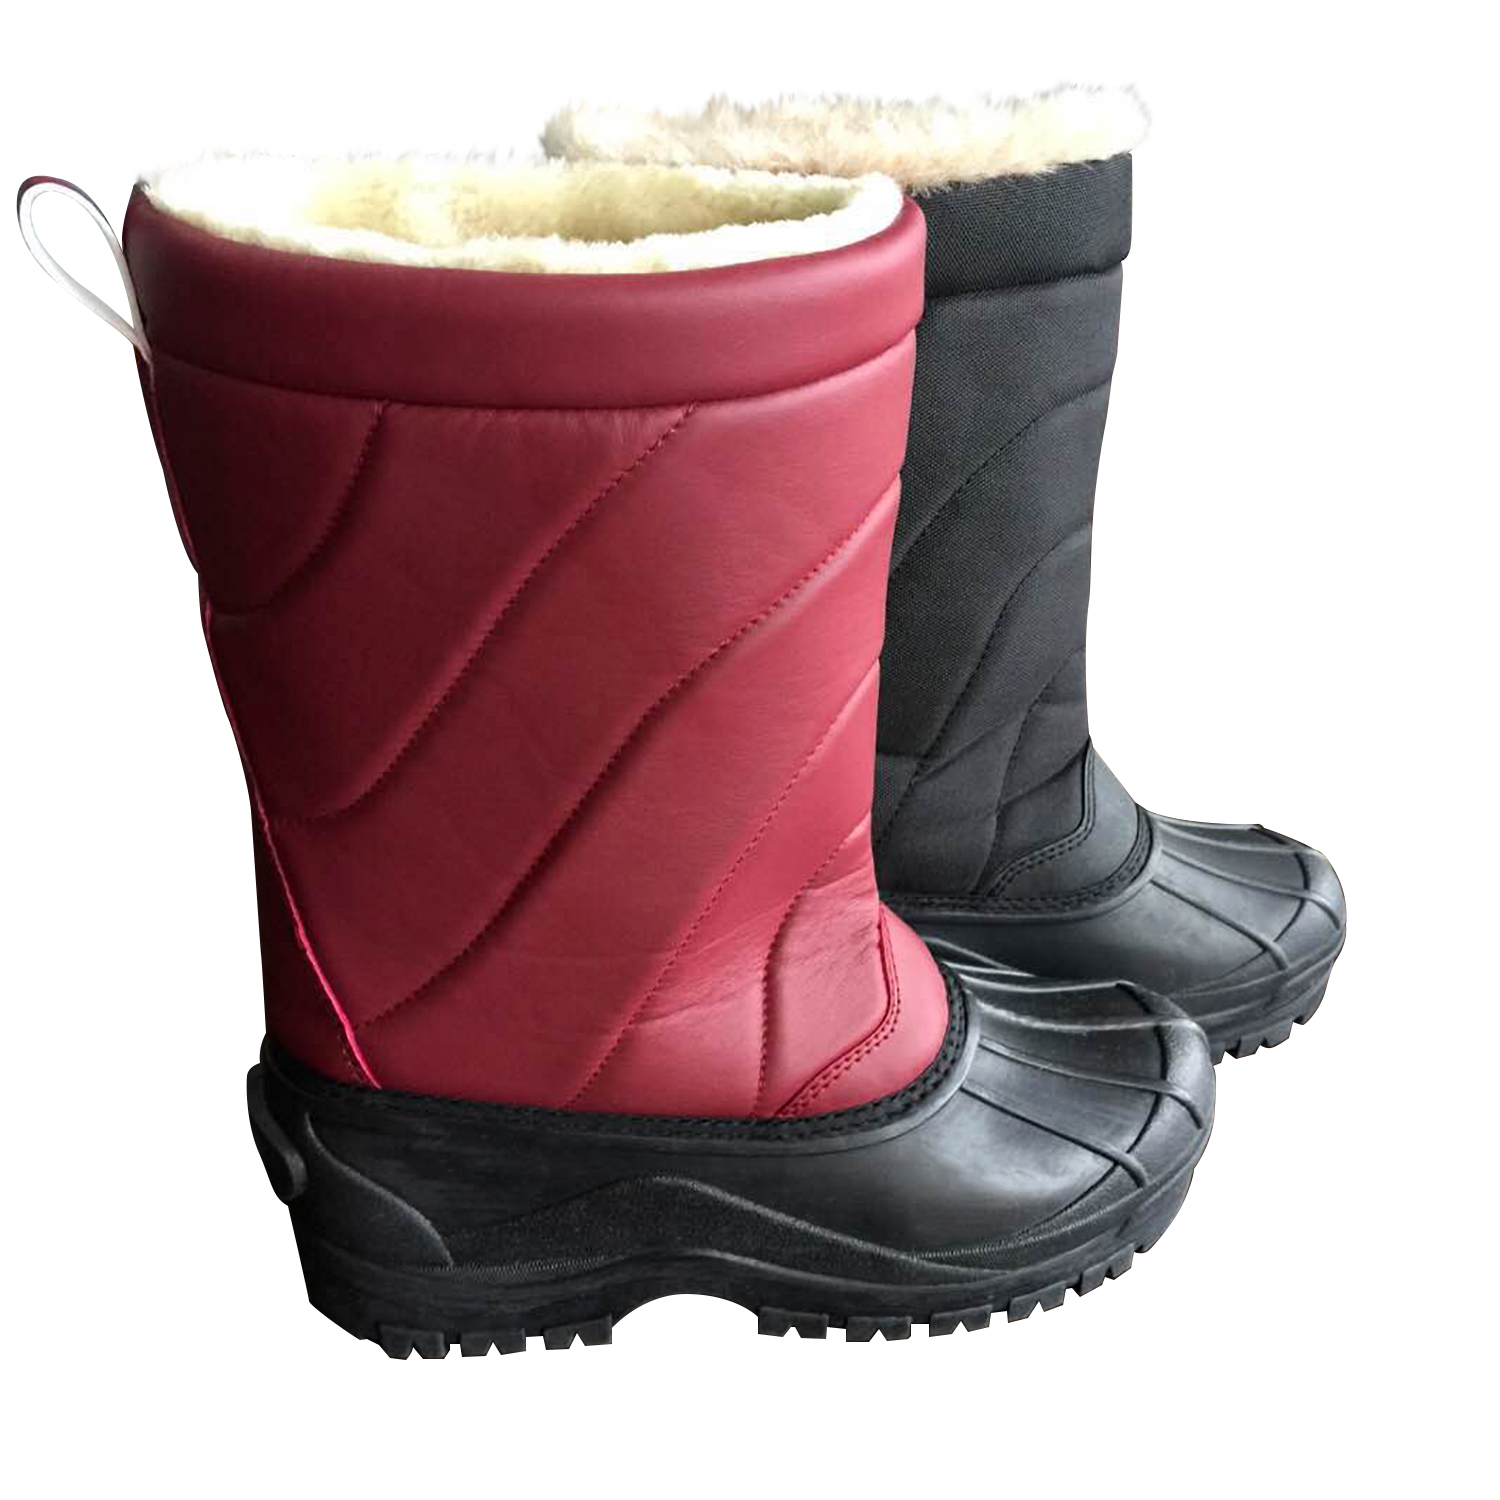 Women's Hiking Boots Waterproof Mid Top Boot Shoe Mountaineering Outdoor Shoes 